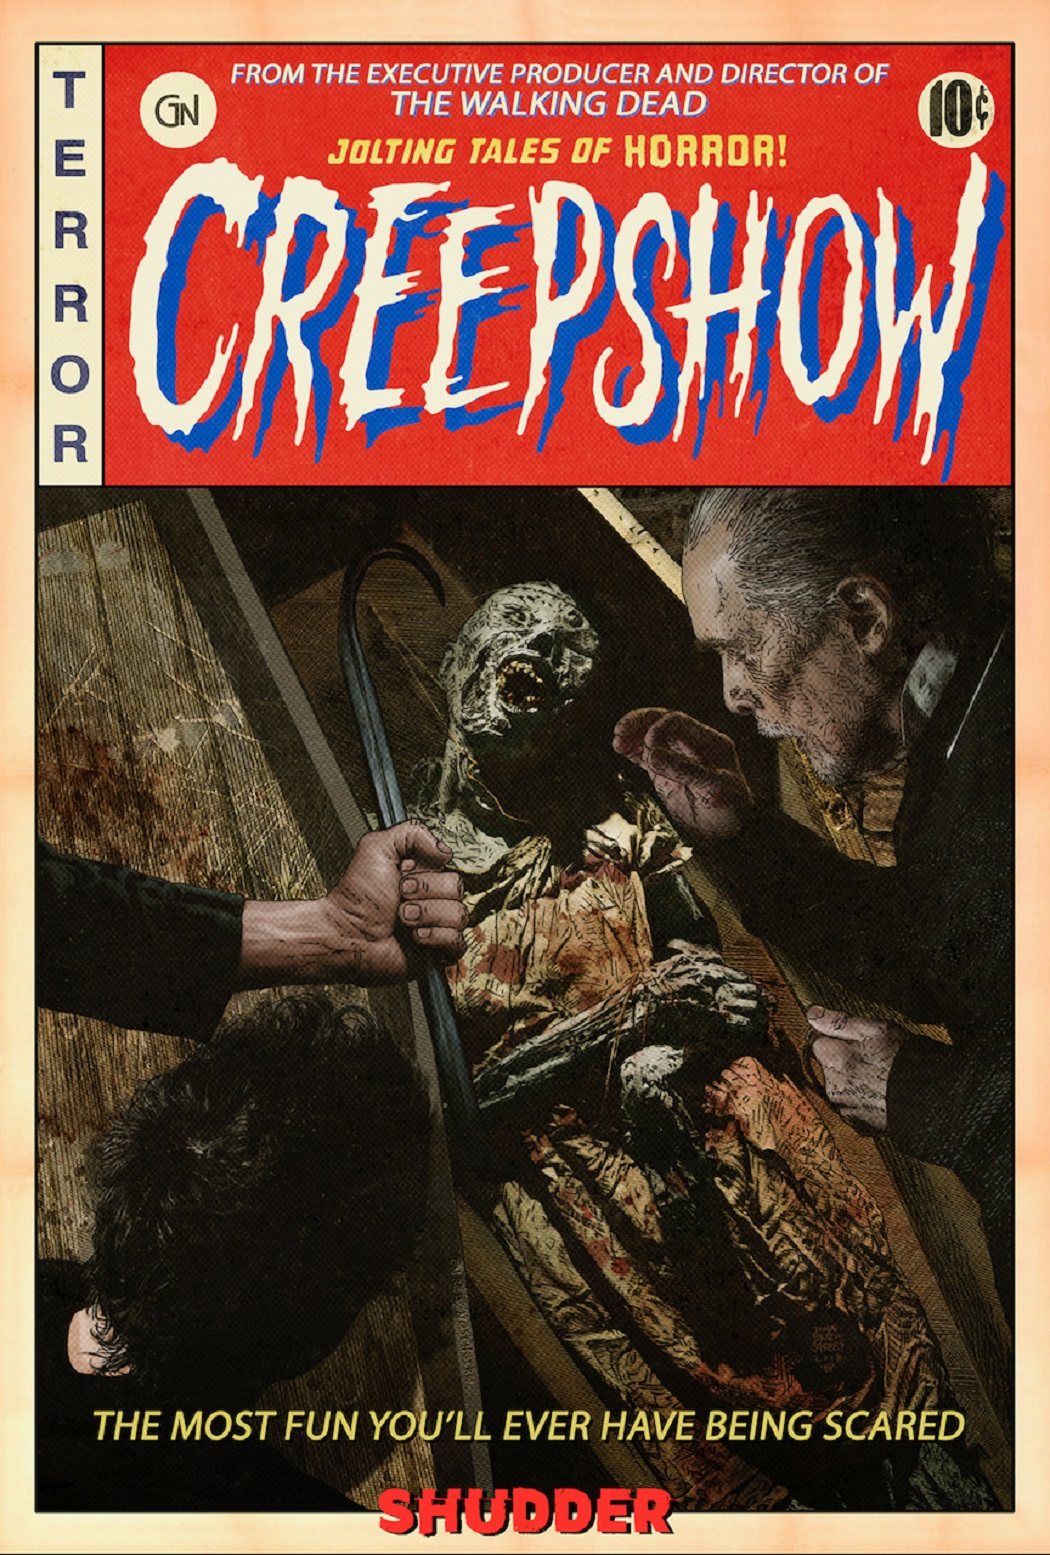 'Creepshow'